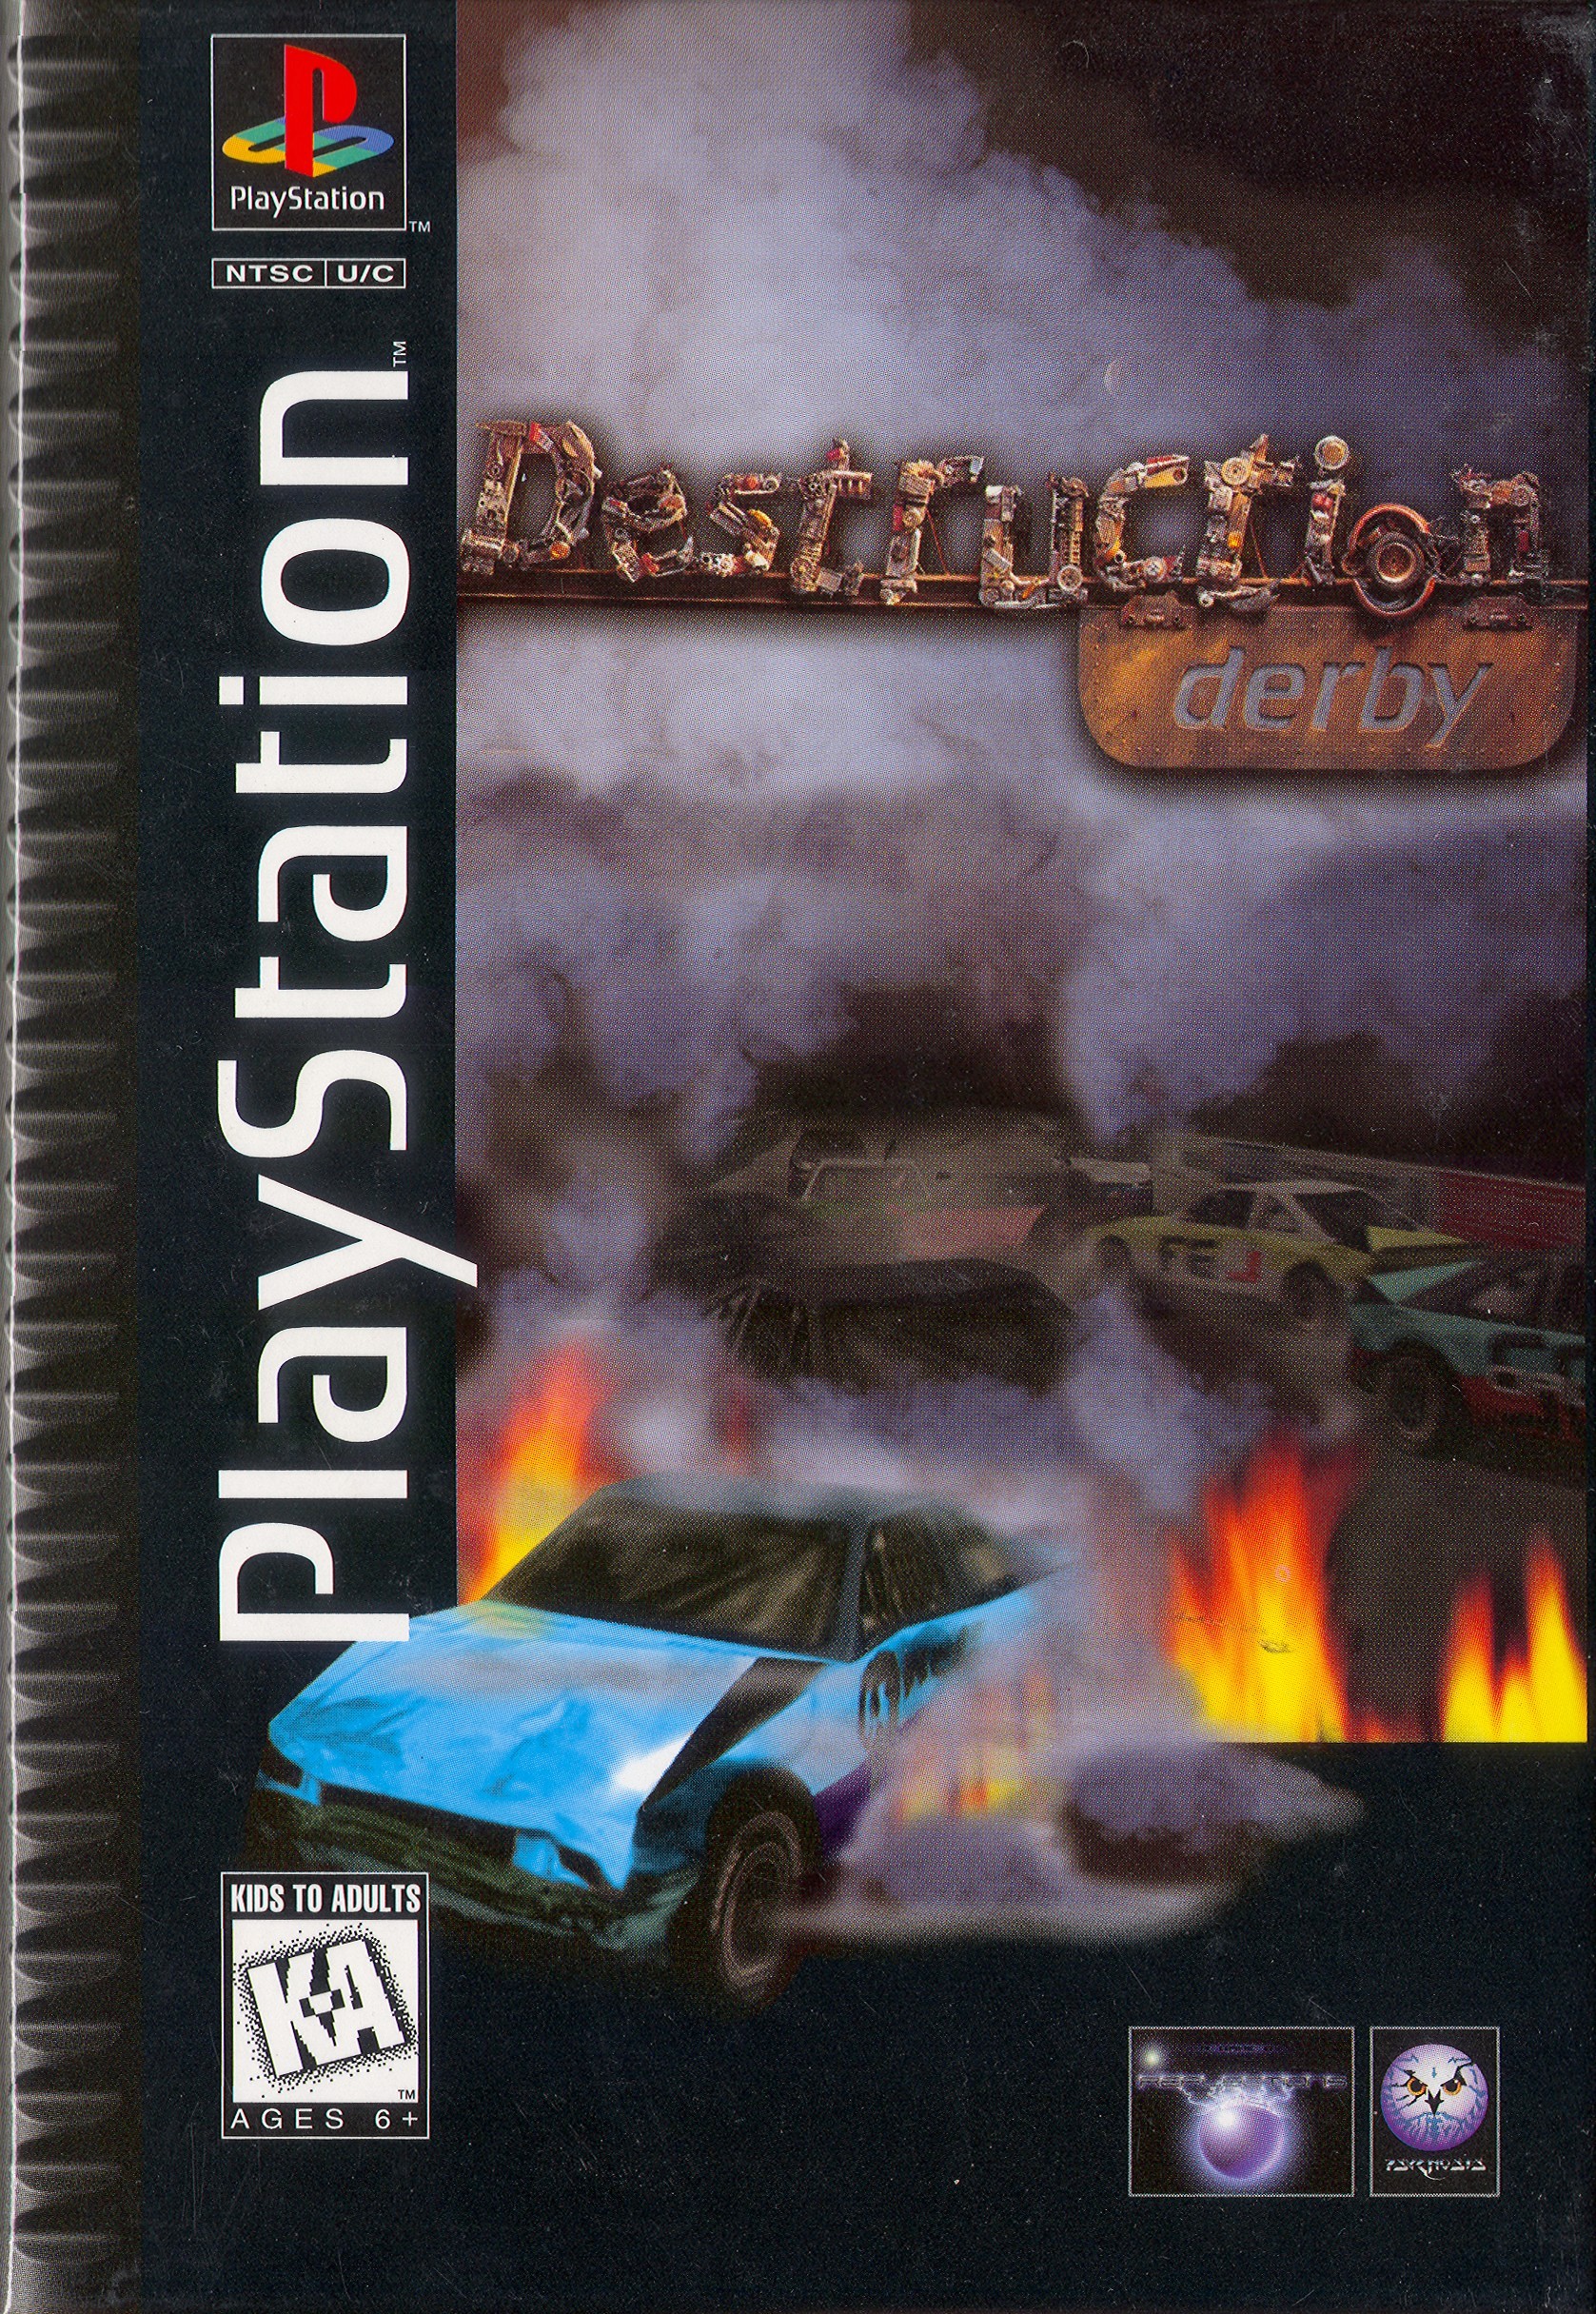 download destruction derby psx